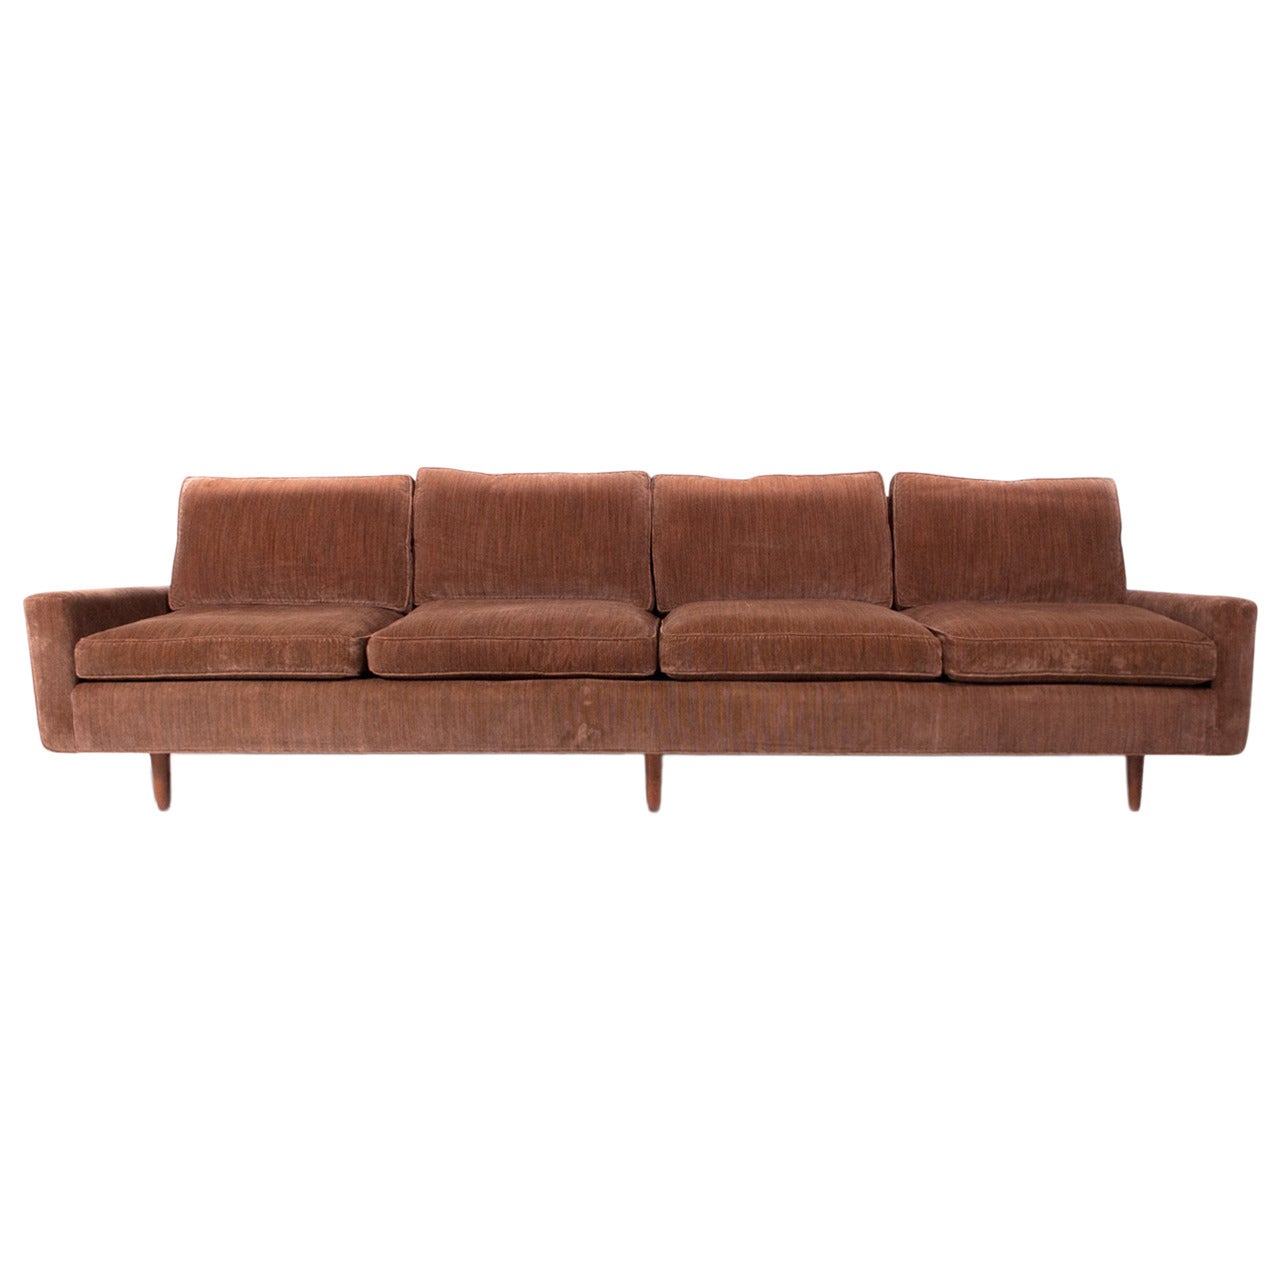 Rare Sofa No. 26 by Florence Knoll